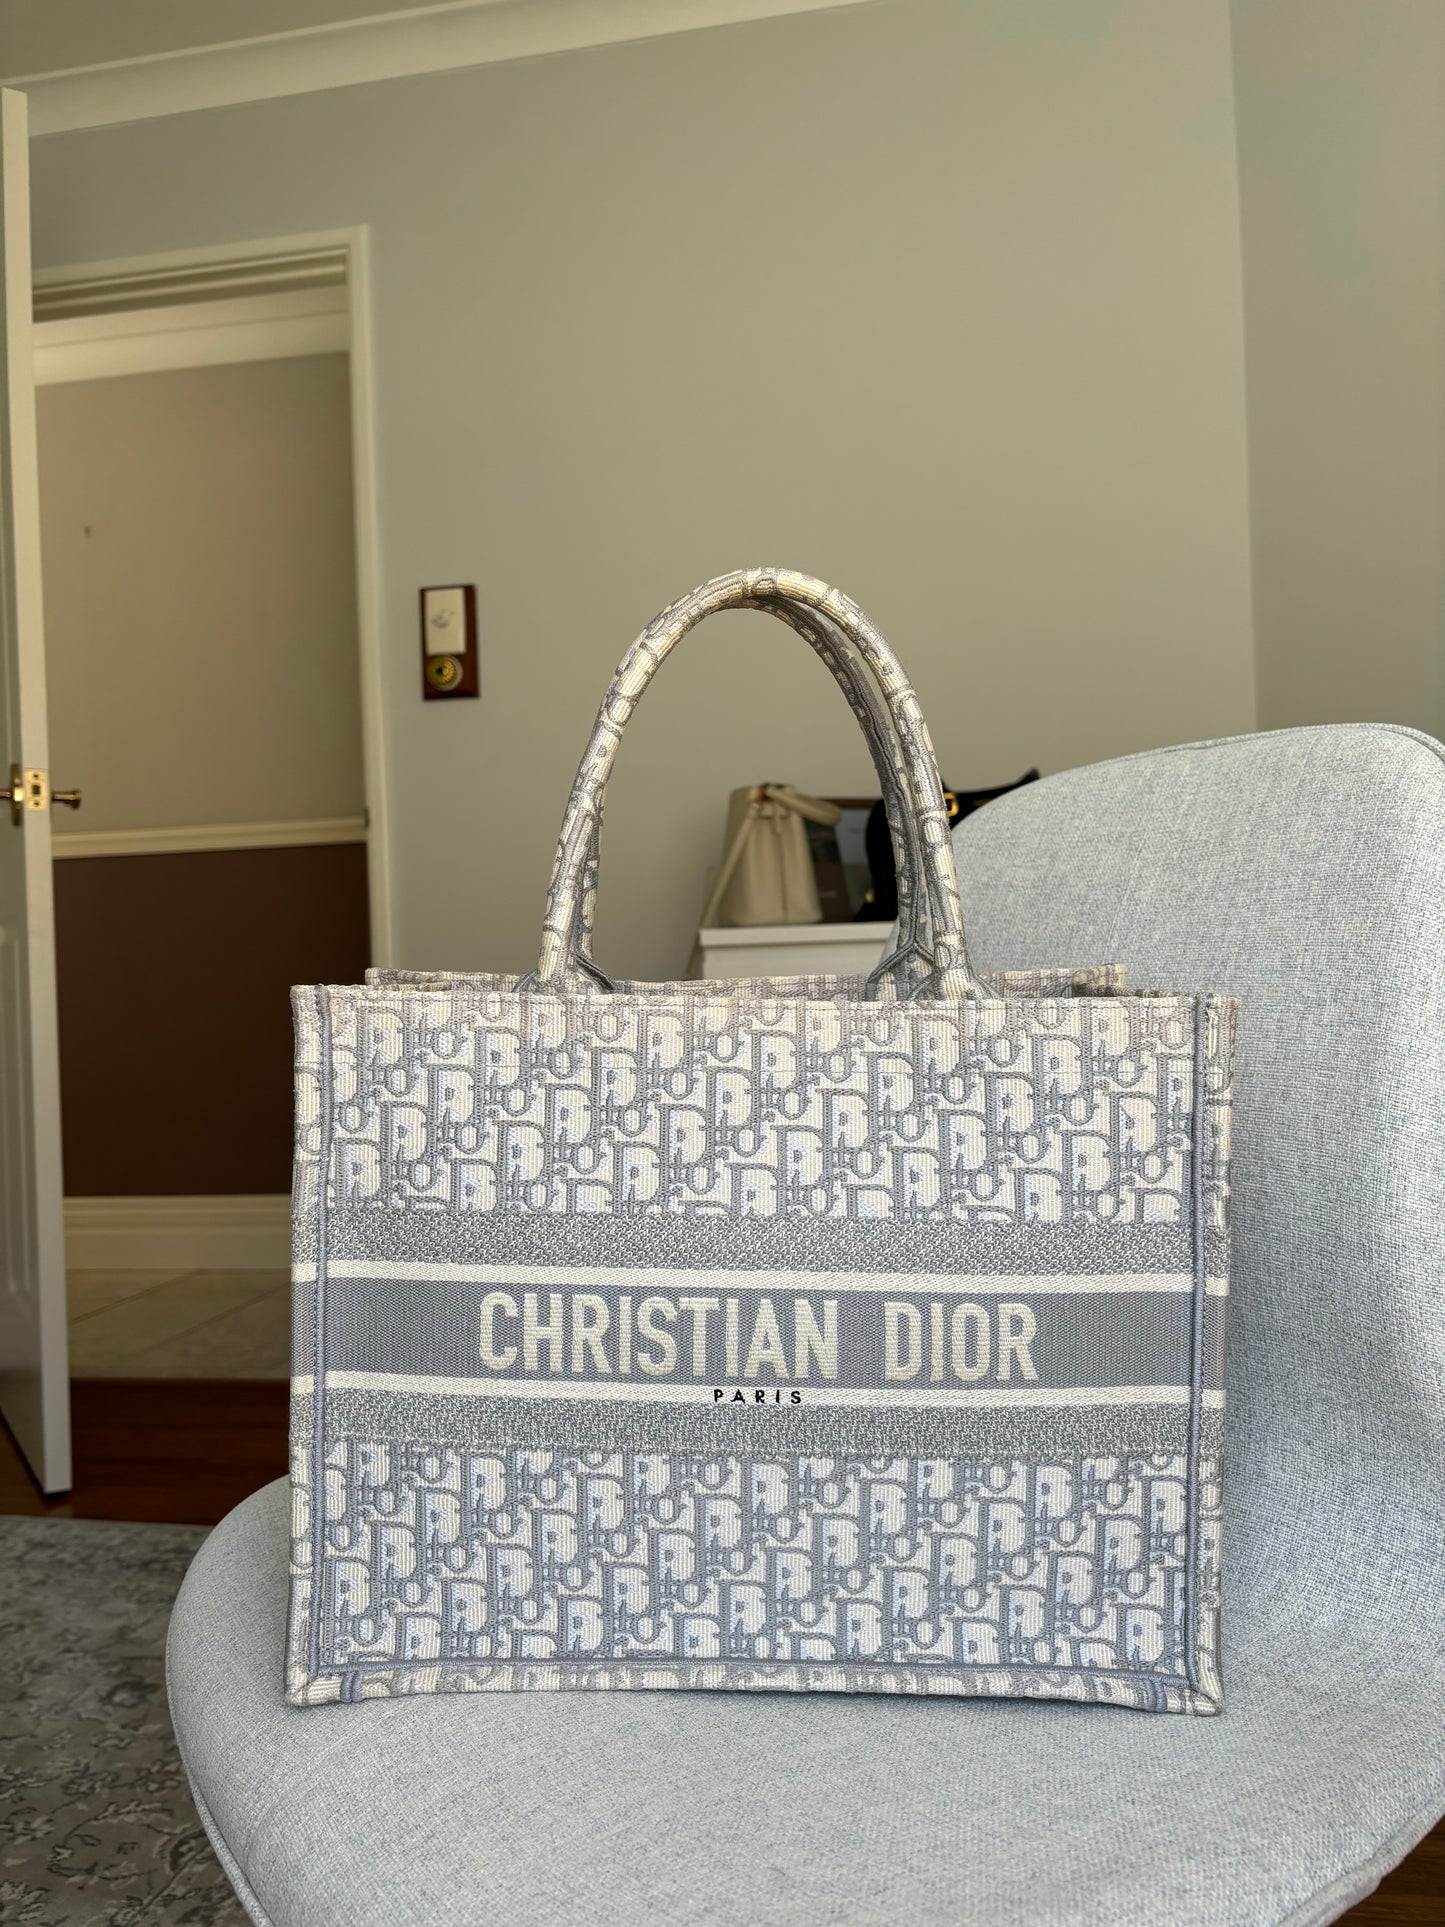 Christian Dior Medium Book Tote in Gradient Oblique Gray Ecru Trim (Limited Edition)